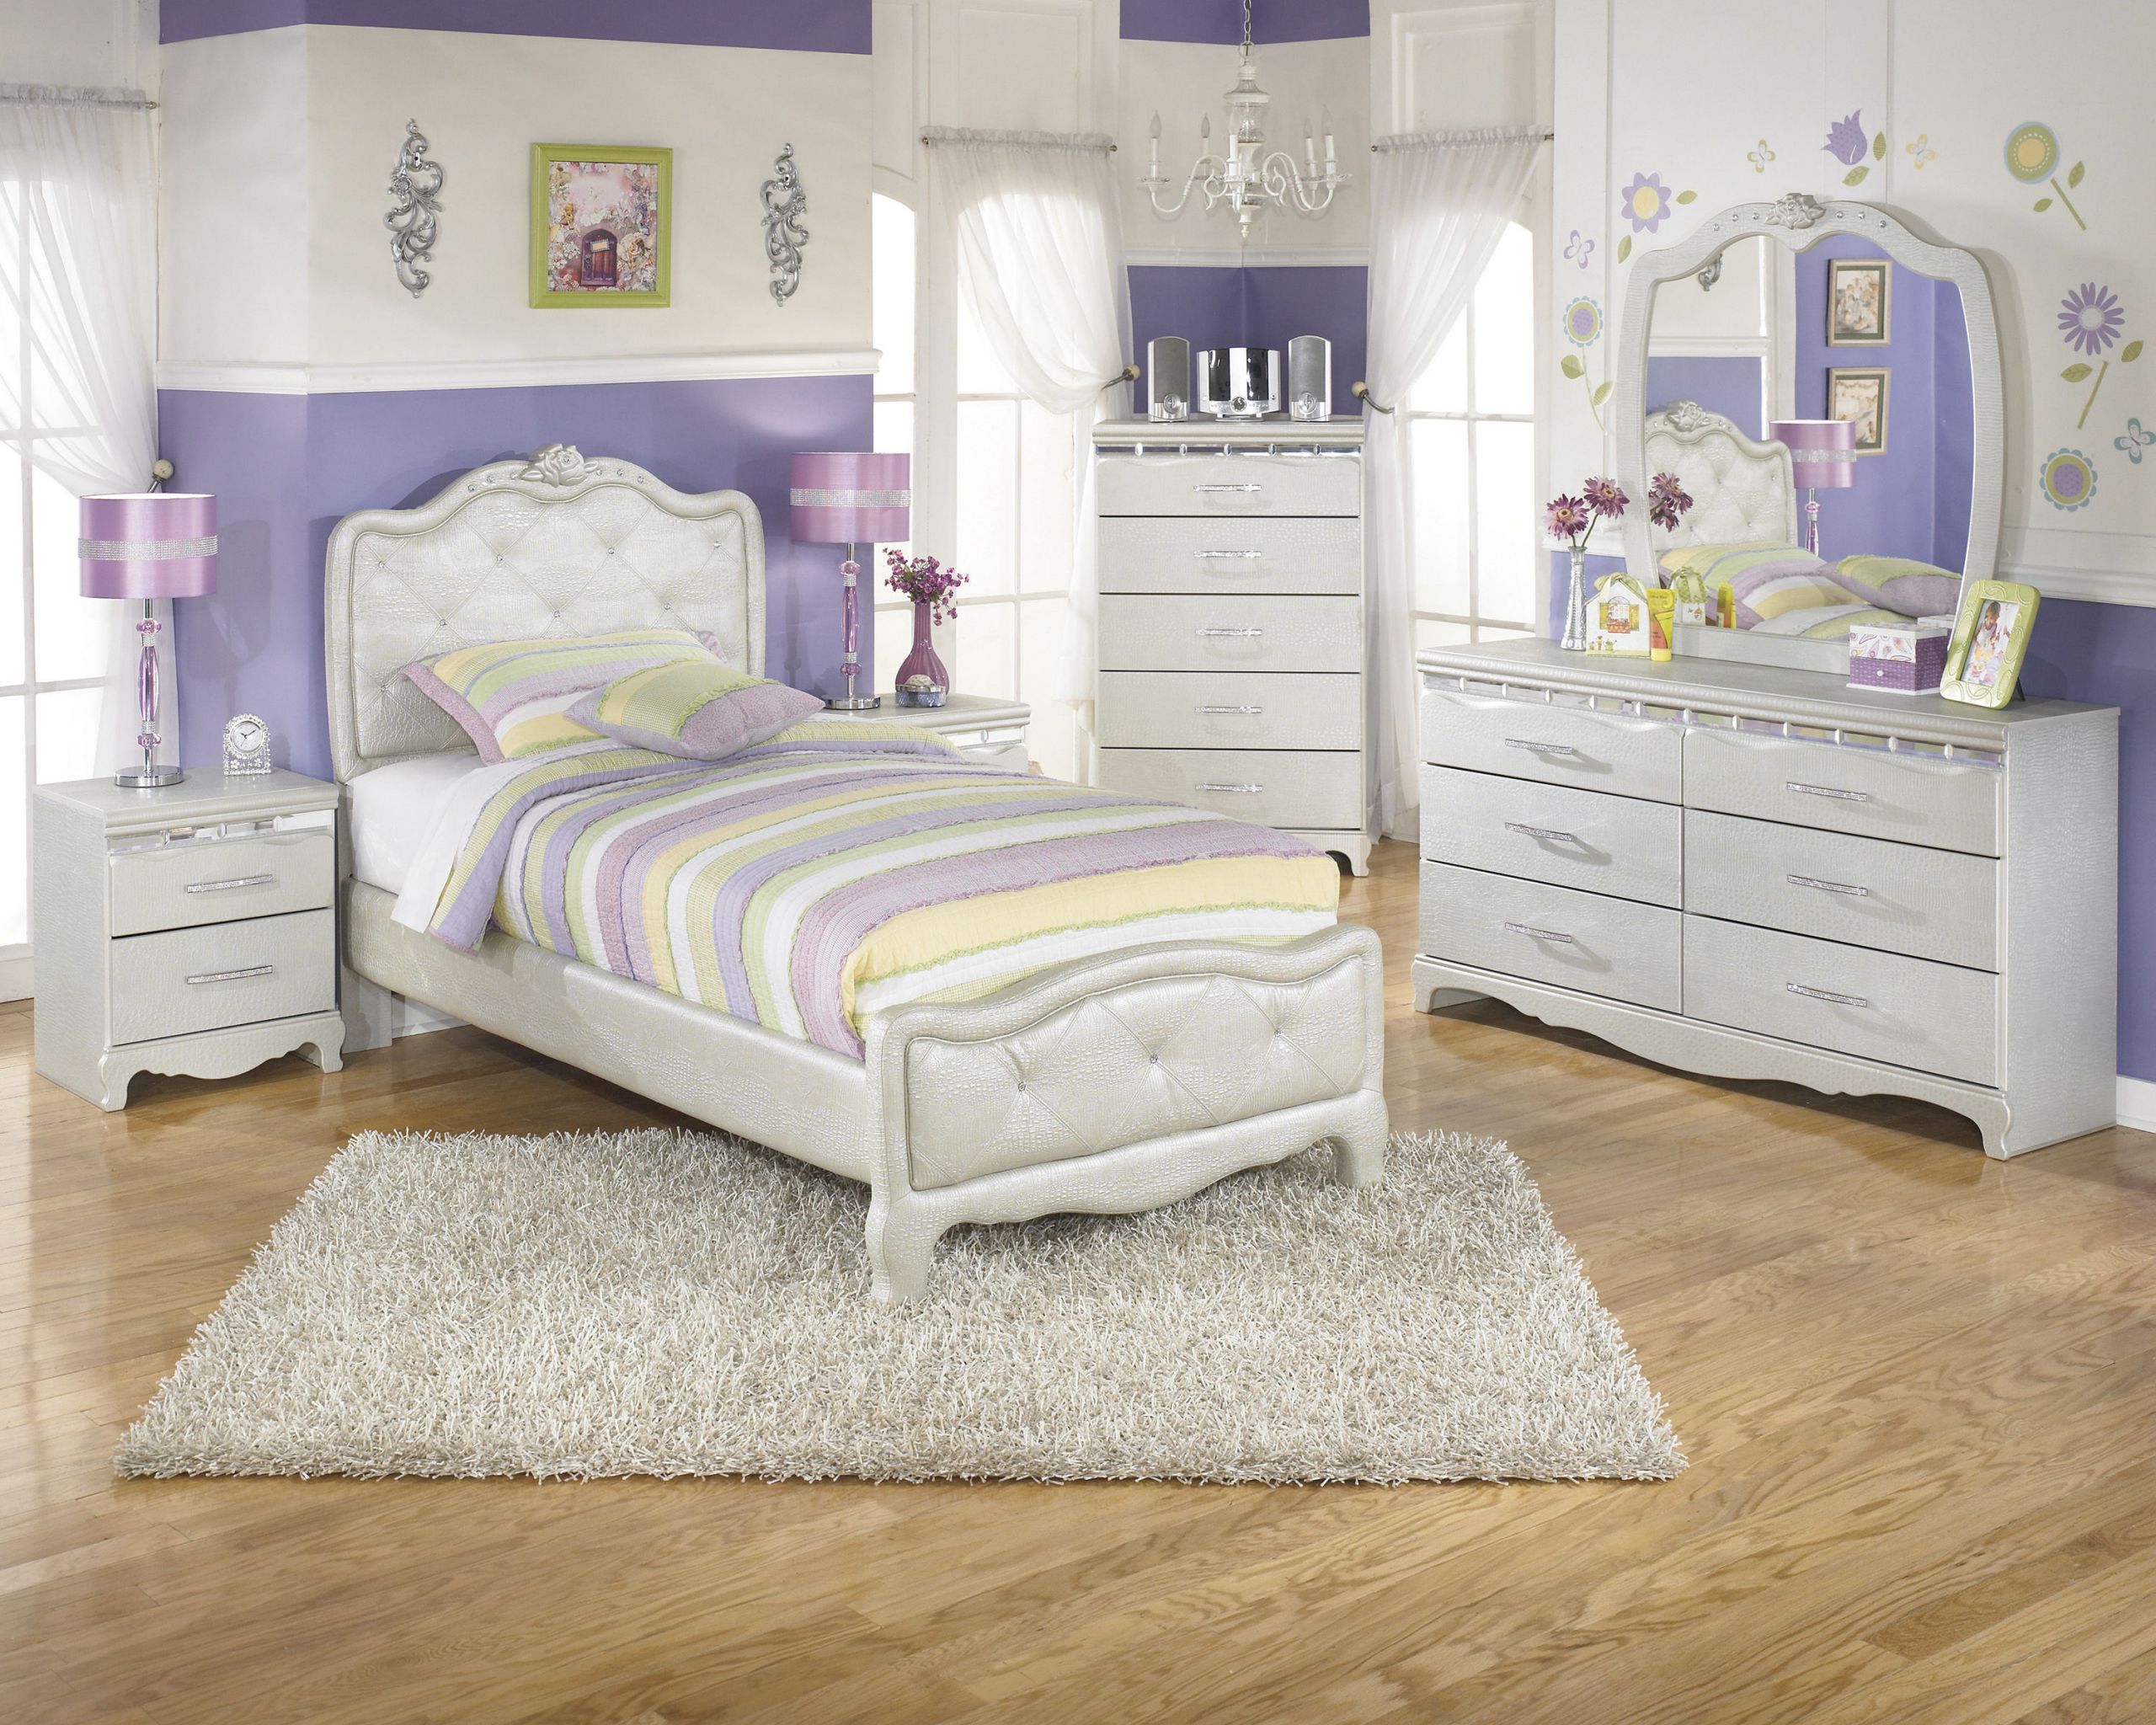 Kids Bedroom Furniture Sets
 Ashley Furniture Zarollina 2pc Kids Bedroom Set with Twin